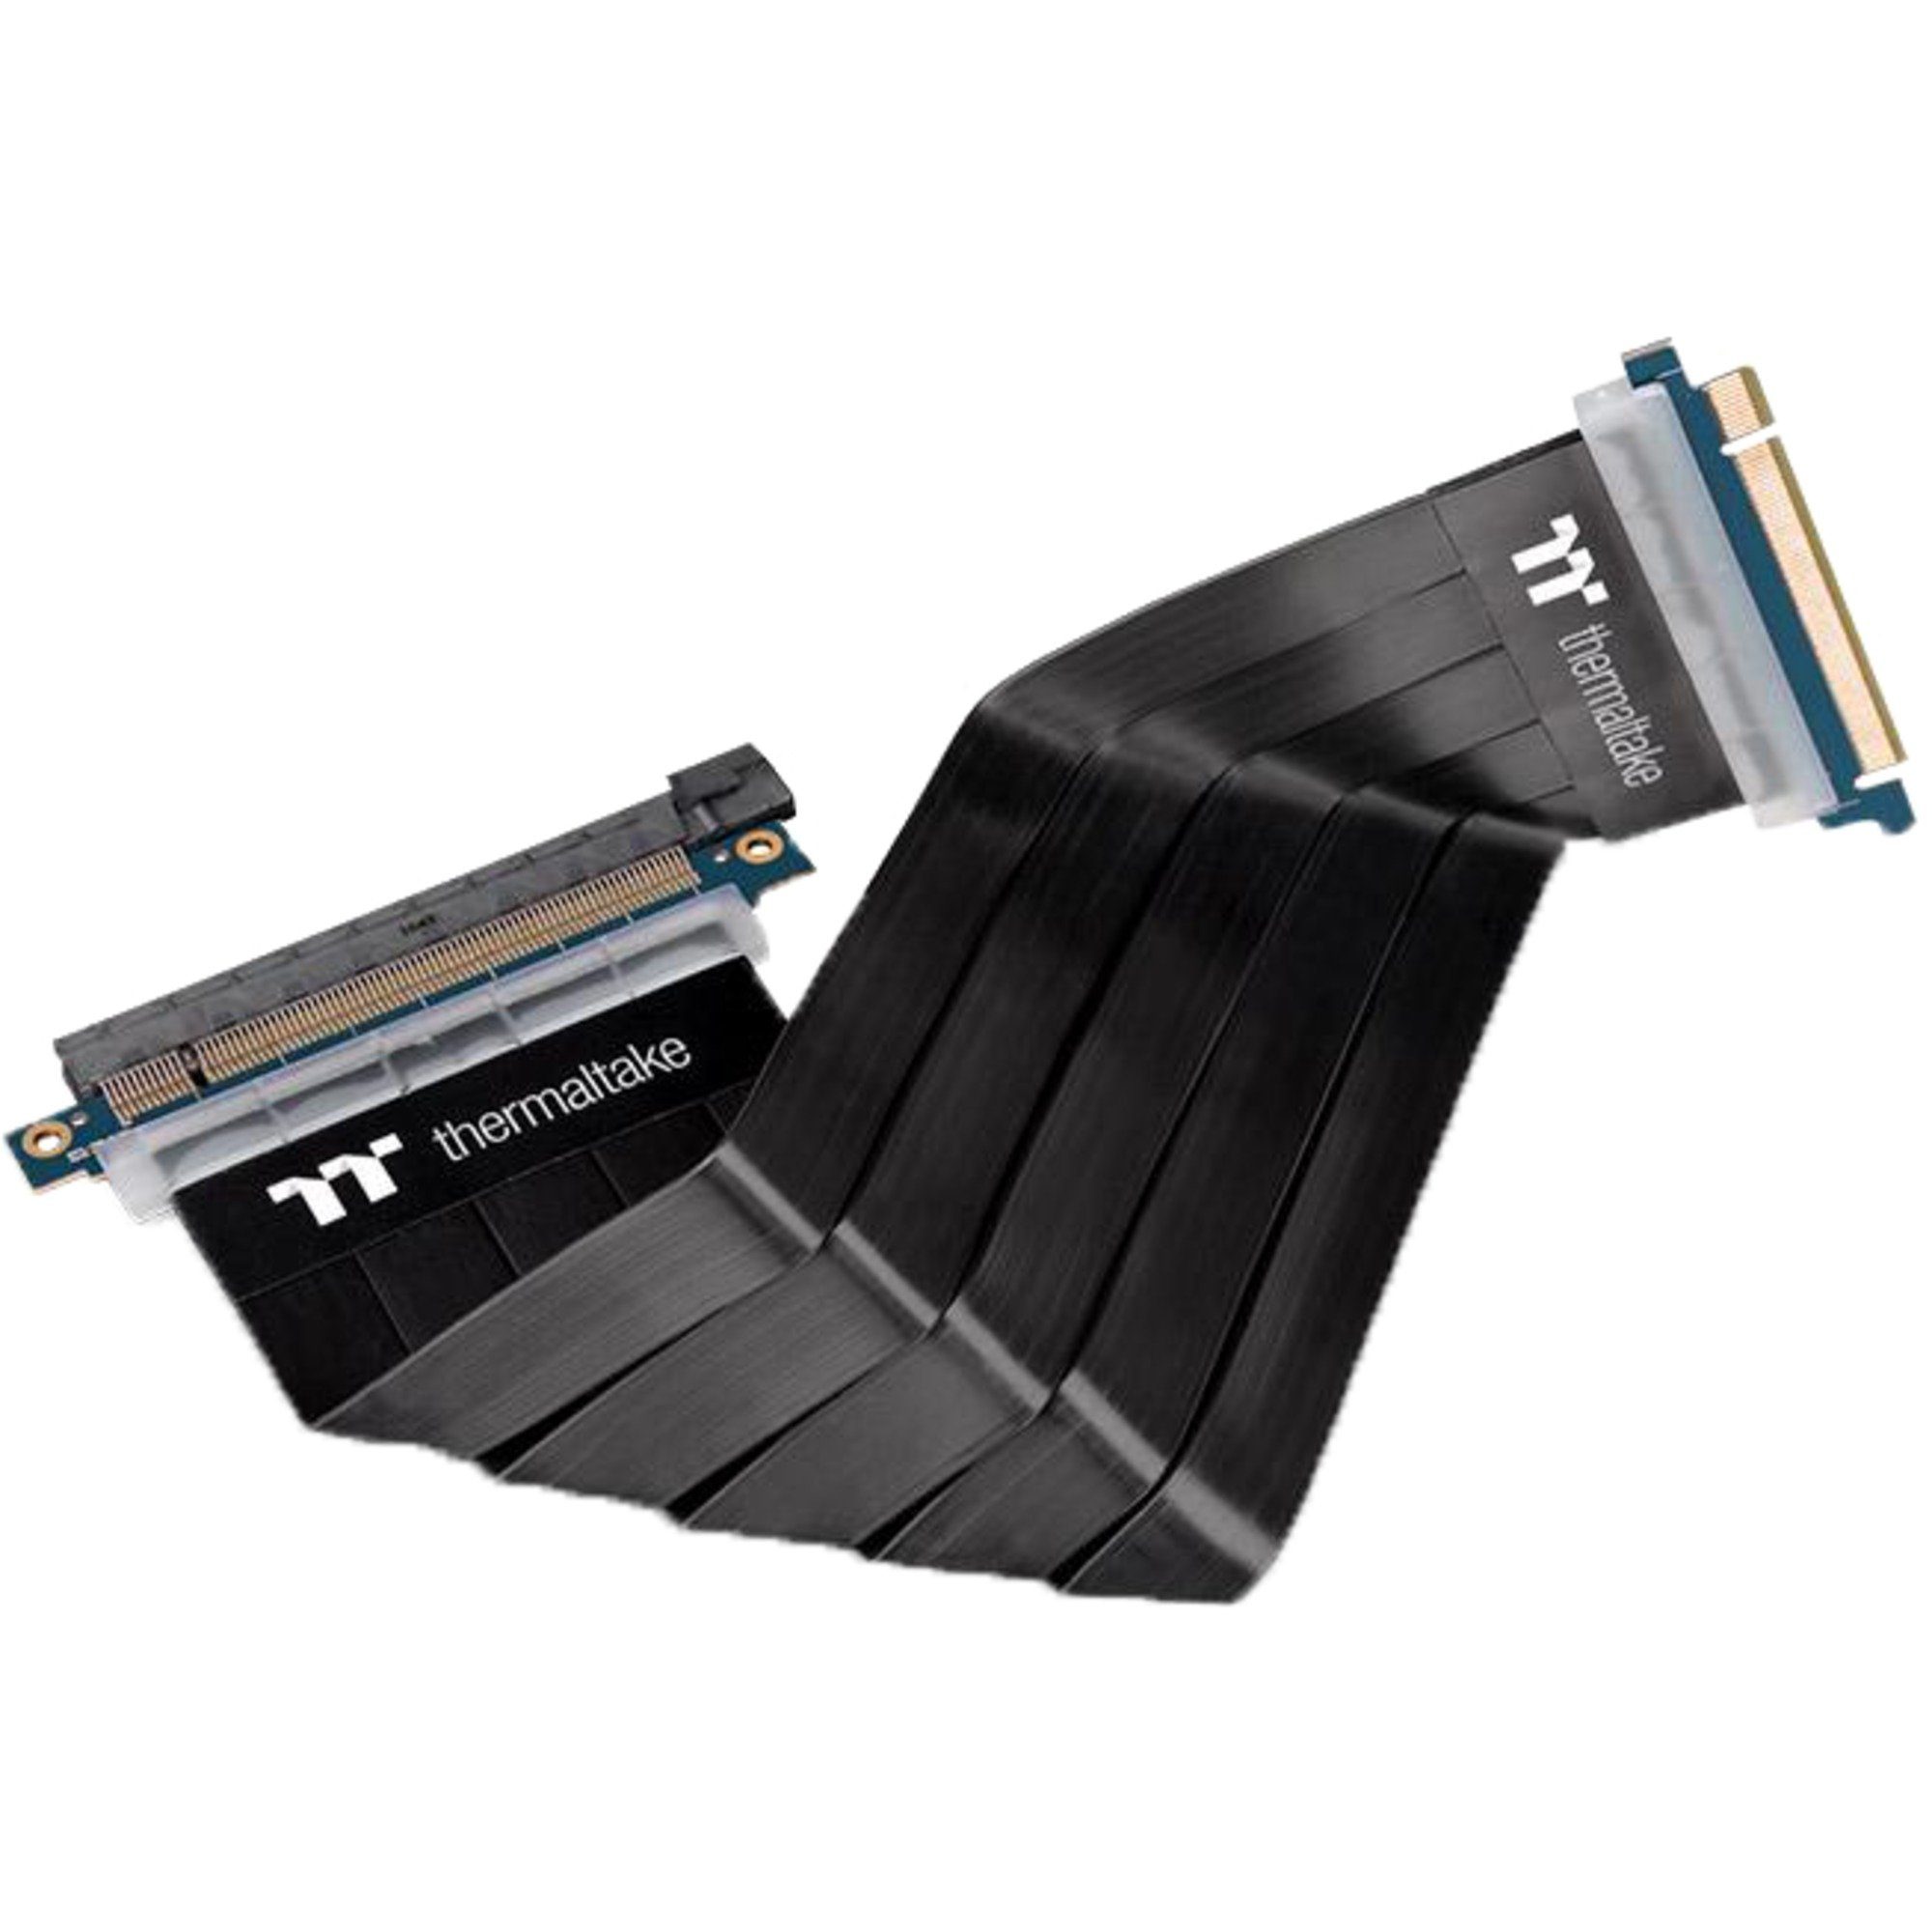 Thermaltake Thermaltake Card PCIe Verlängerungskabel Kabel 30cm, Riser Extender